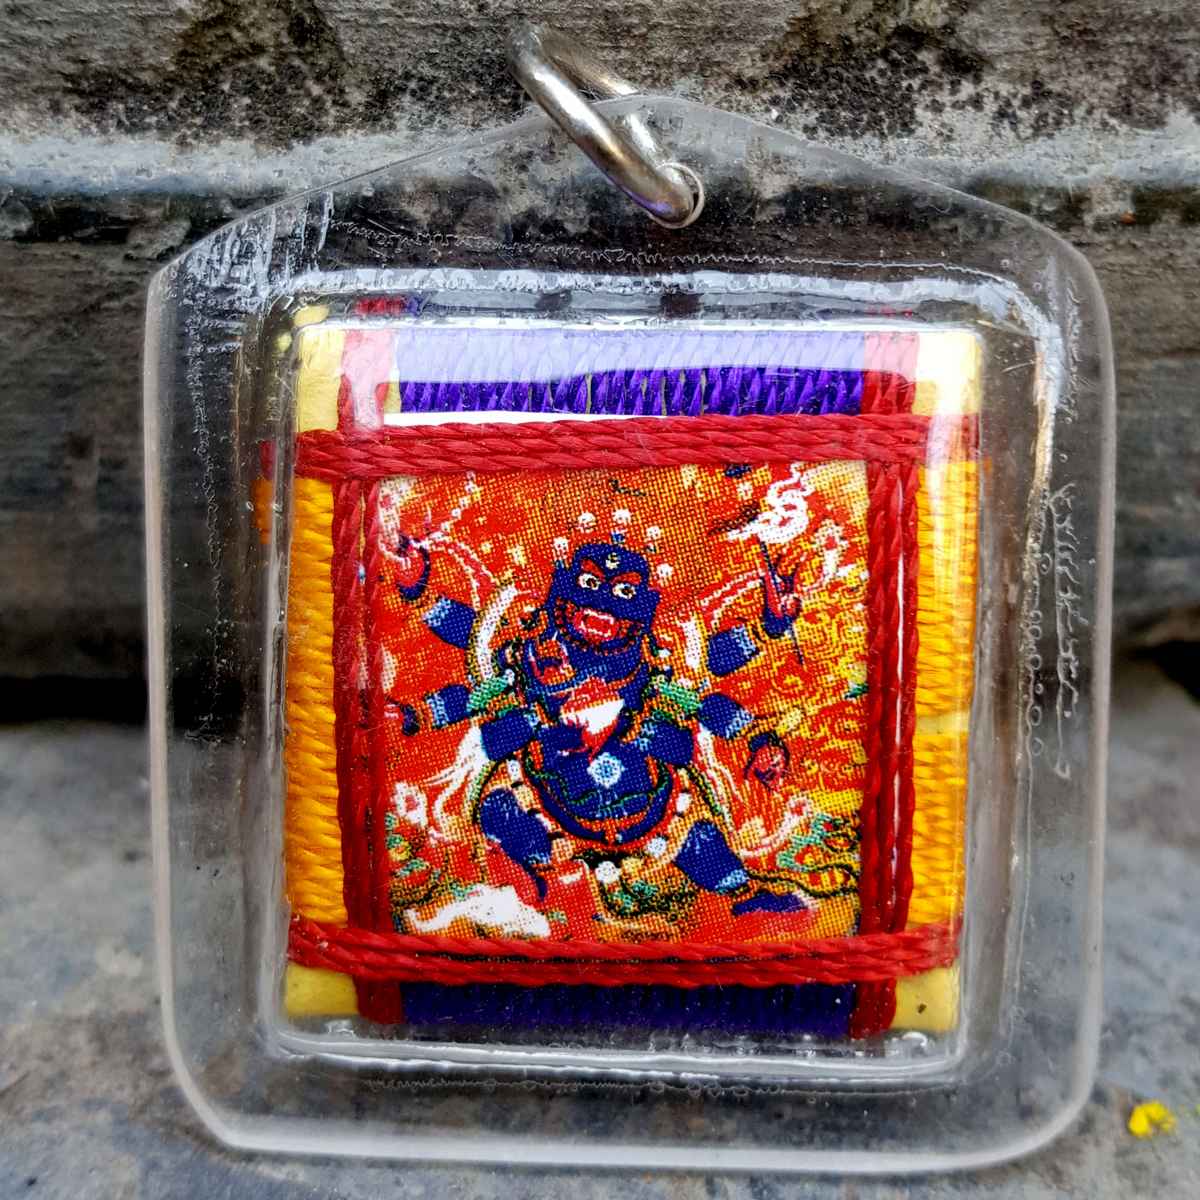 Black Mahakala - Small Tibetan Mantra Amulet With Hard Plastic Coat